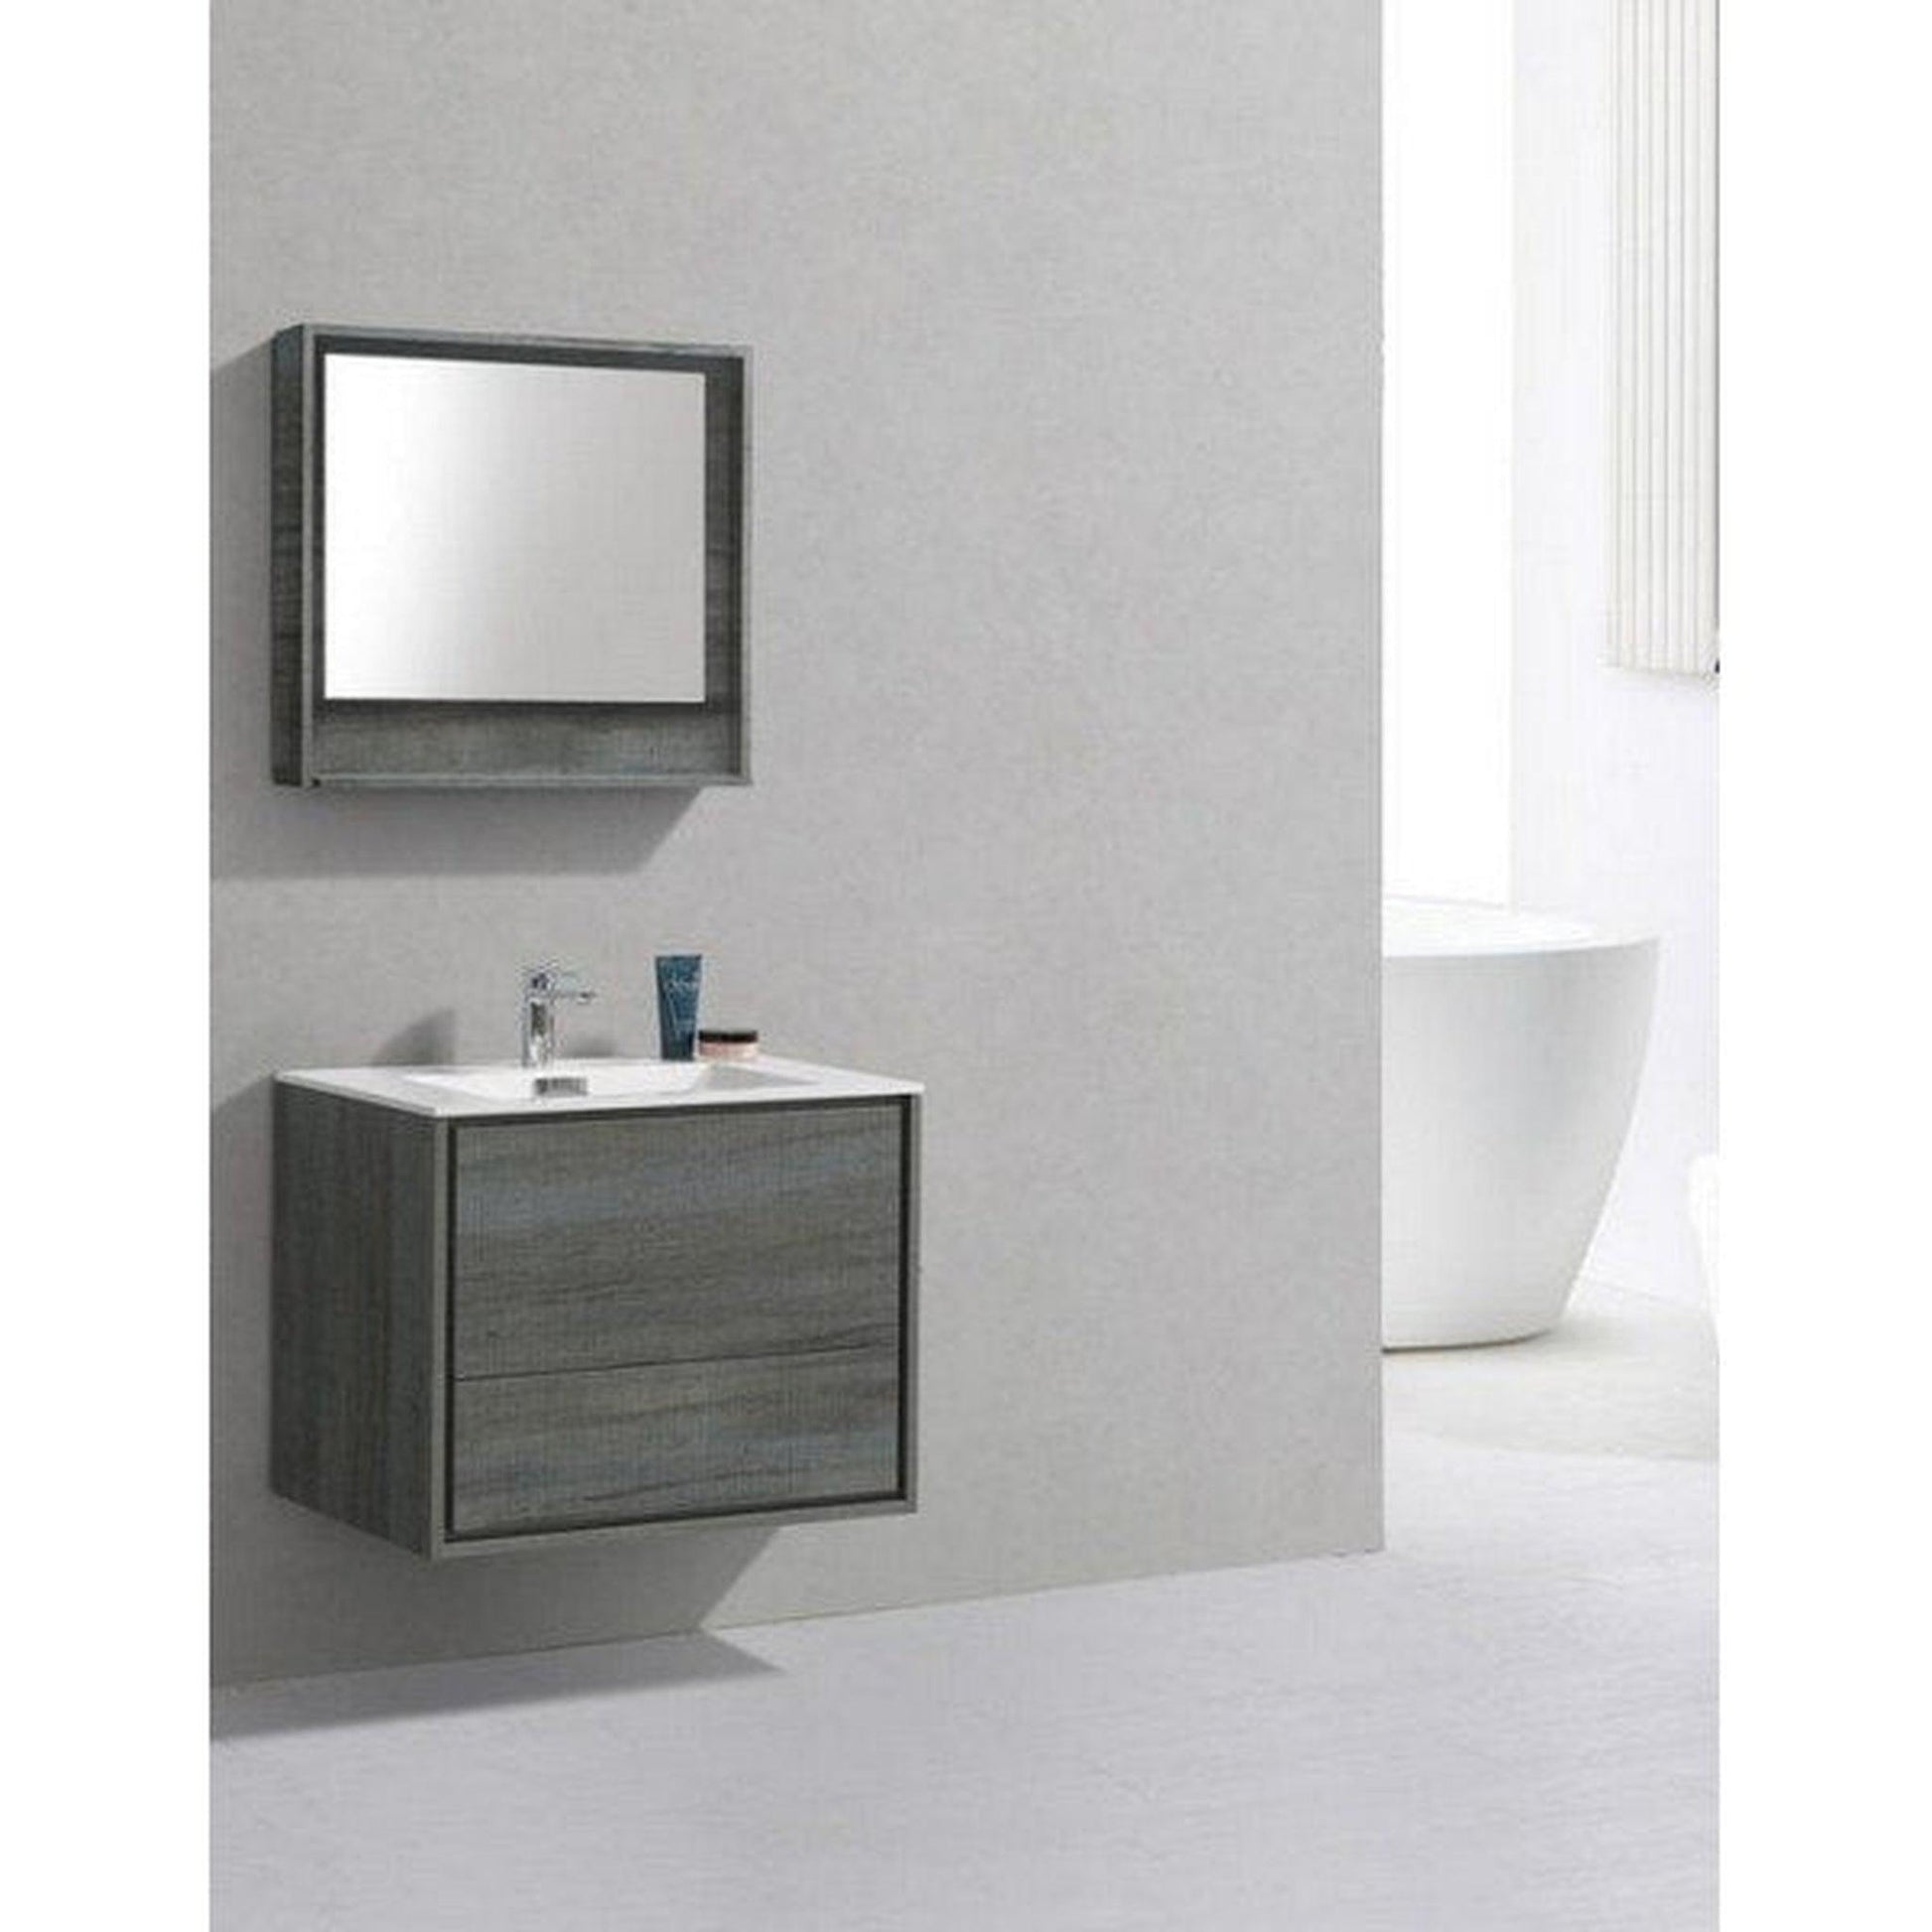 KubeBath DeLusso 30" Ocean Gray Wall-Mounted Modern Bathroom Vanity With Single Integrated Acrylic Sink With Overflow